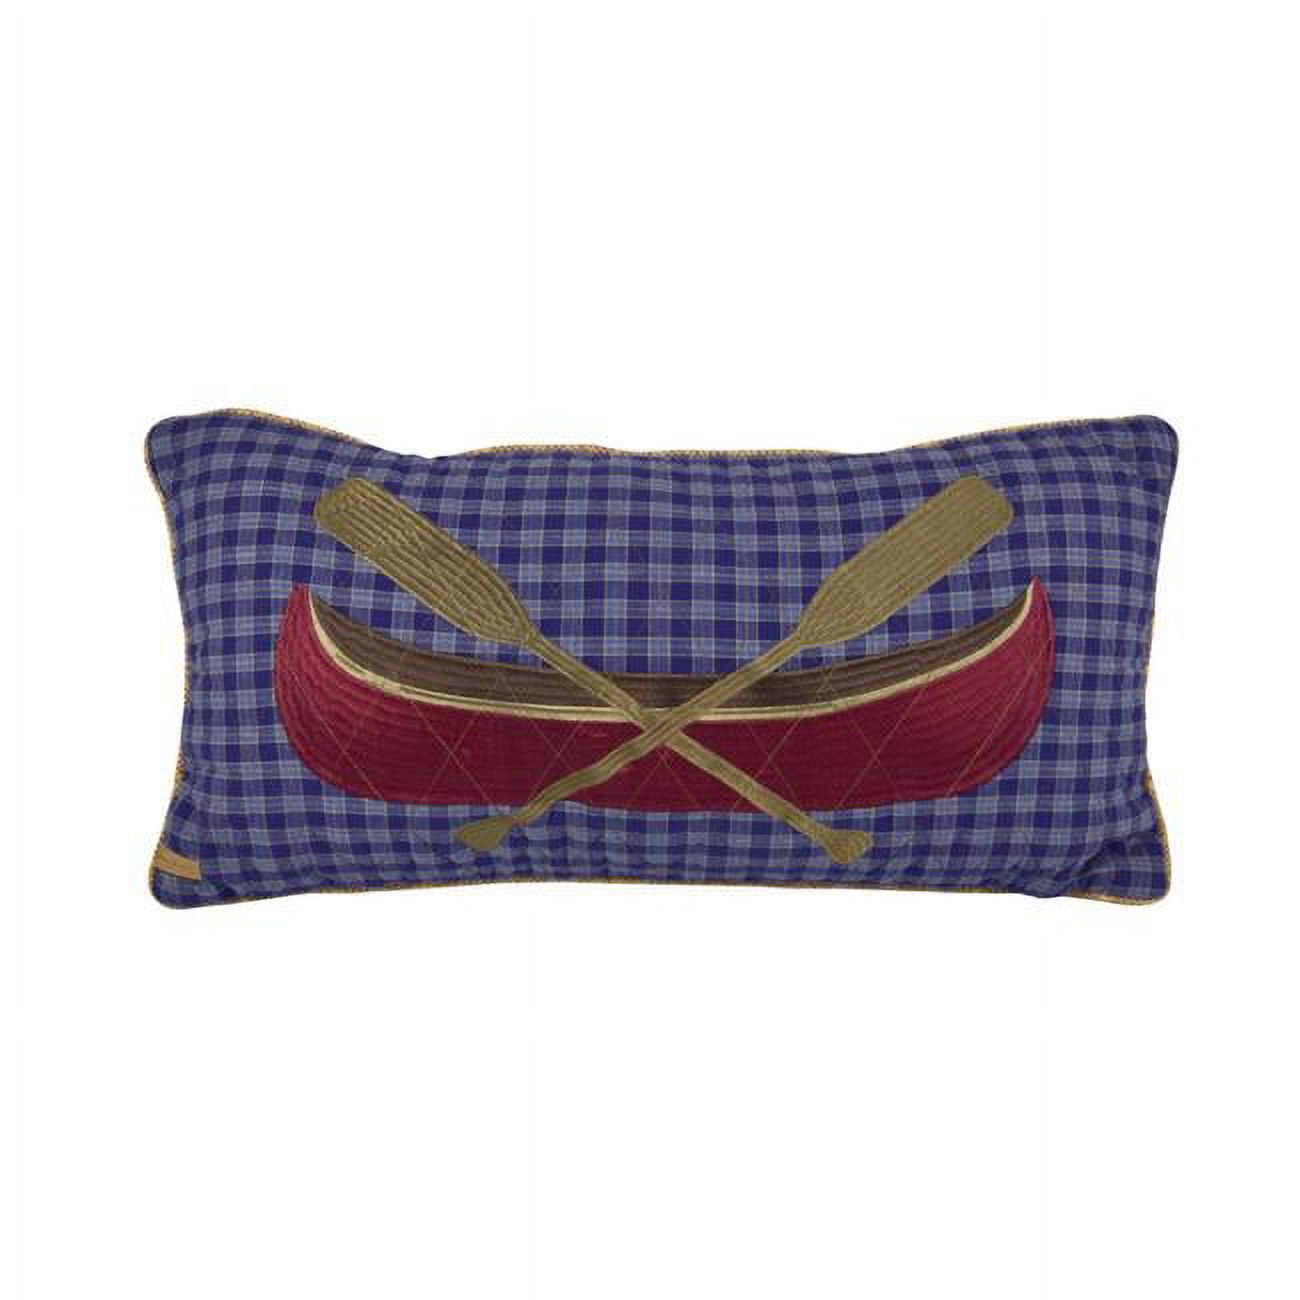 83717 11 X 22 In. Lake House Canoe Decorative Pillow, Navy & Burgundy